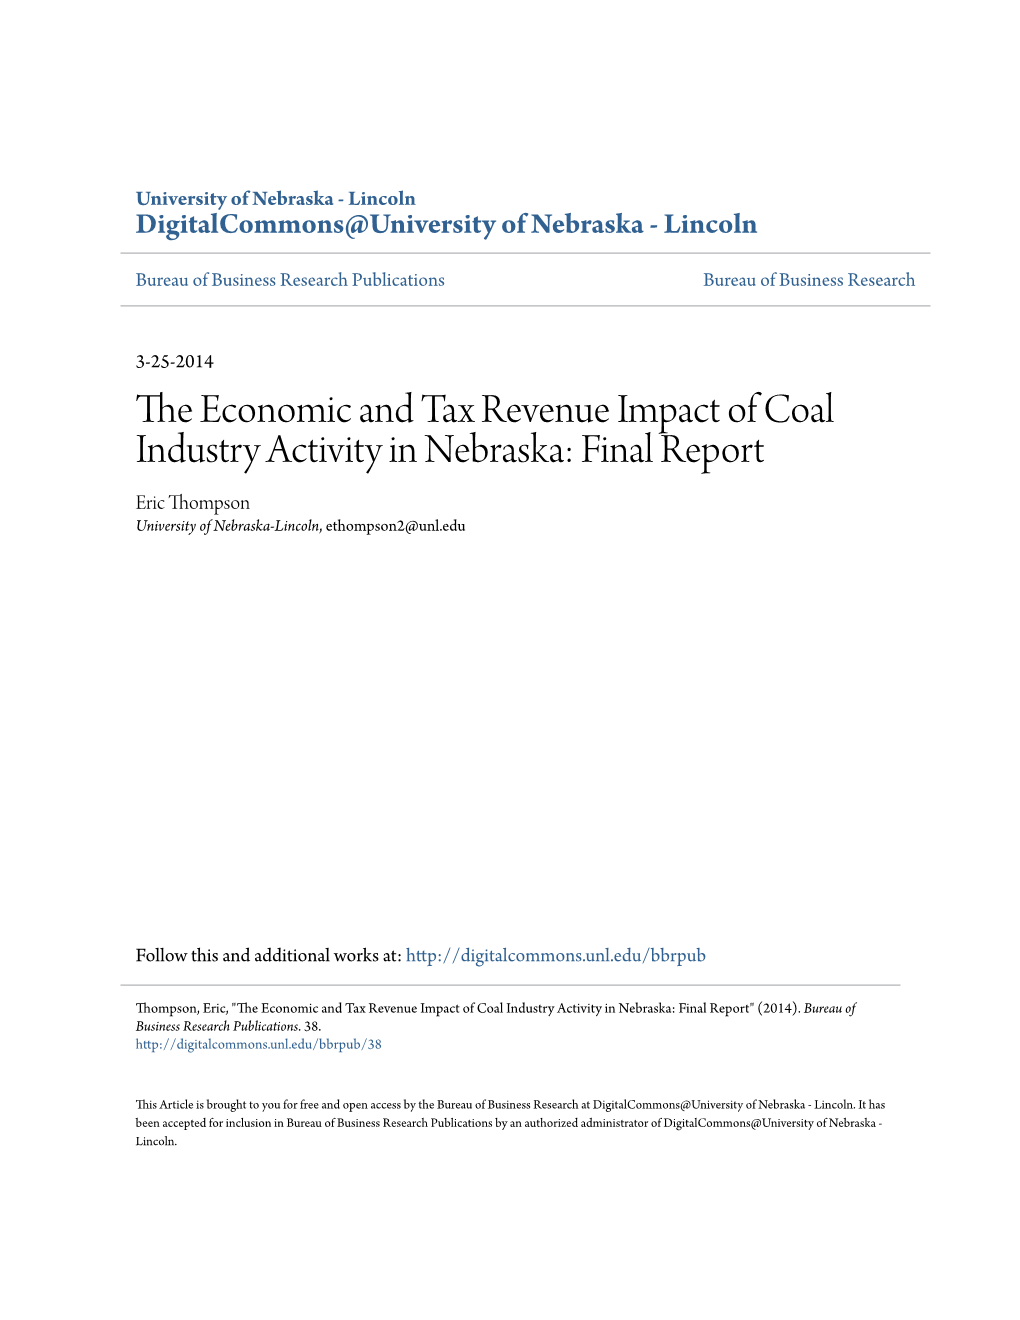 The Economic and Tax Revenue Impact of Coal Industry Activity in Nebraska